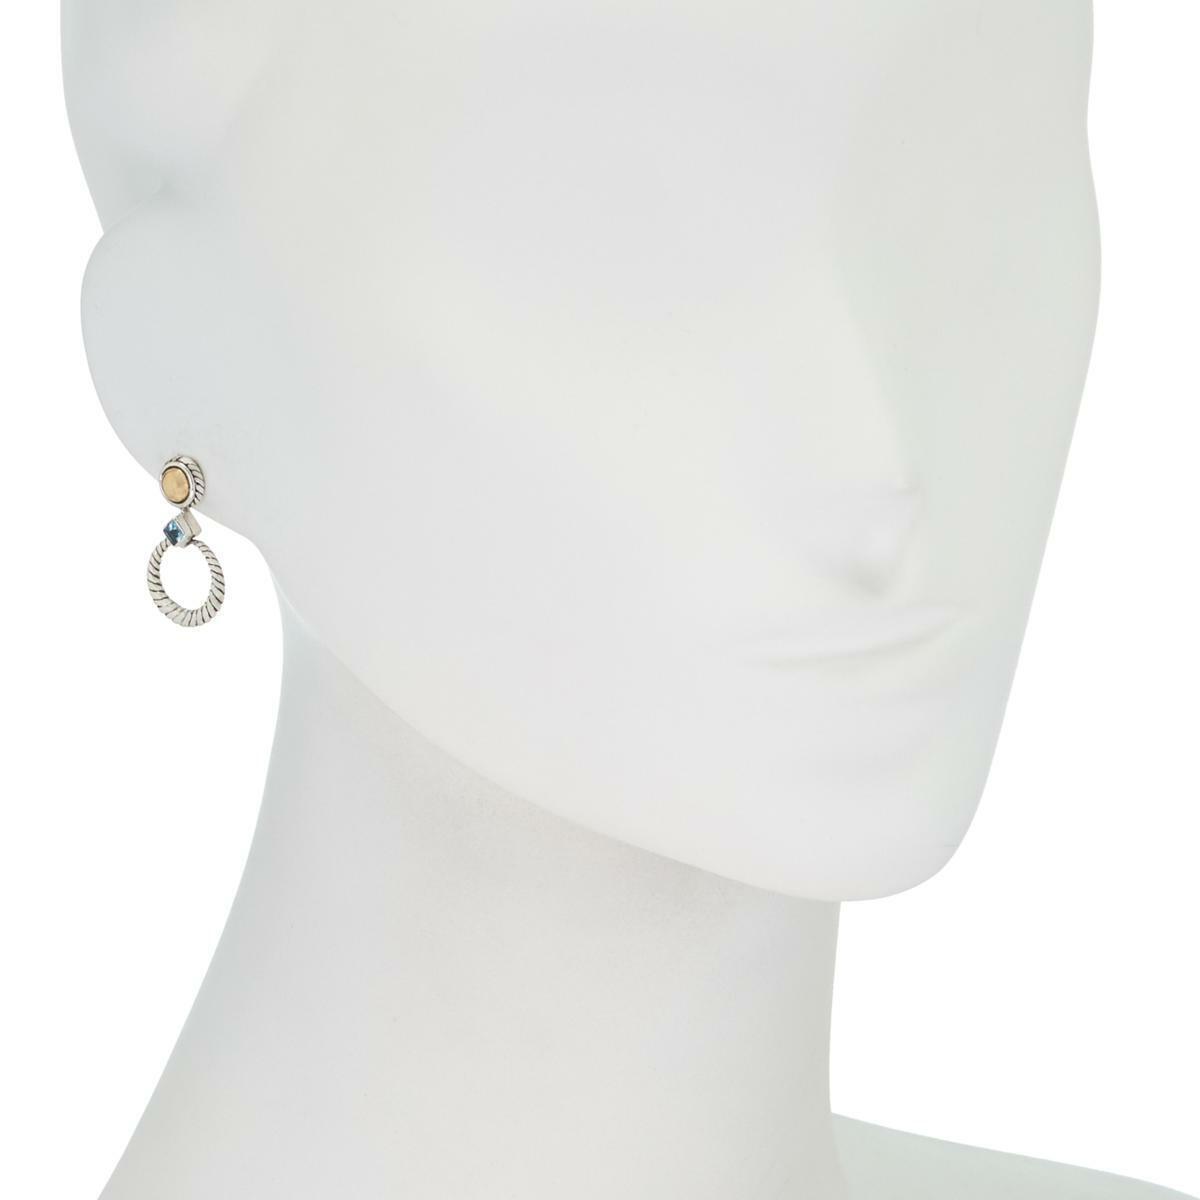 Bali Designs Blue Topaz 18K Yellow Gold Dome Drop Earrings - HSN $150